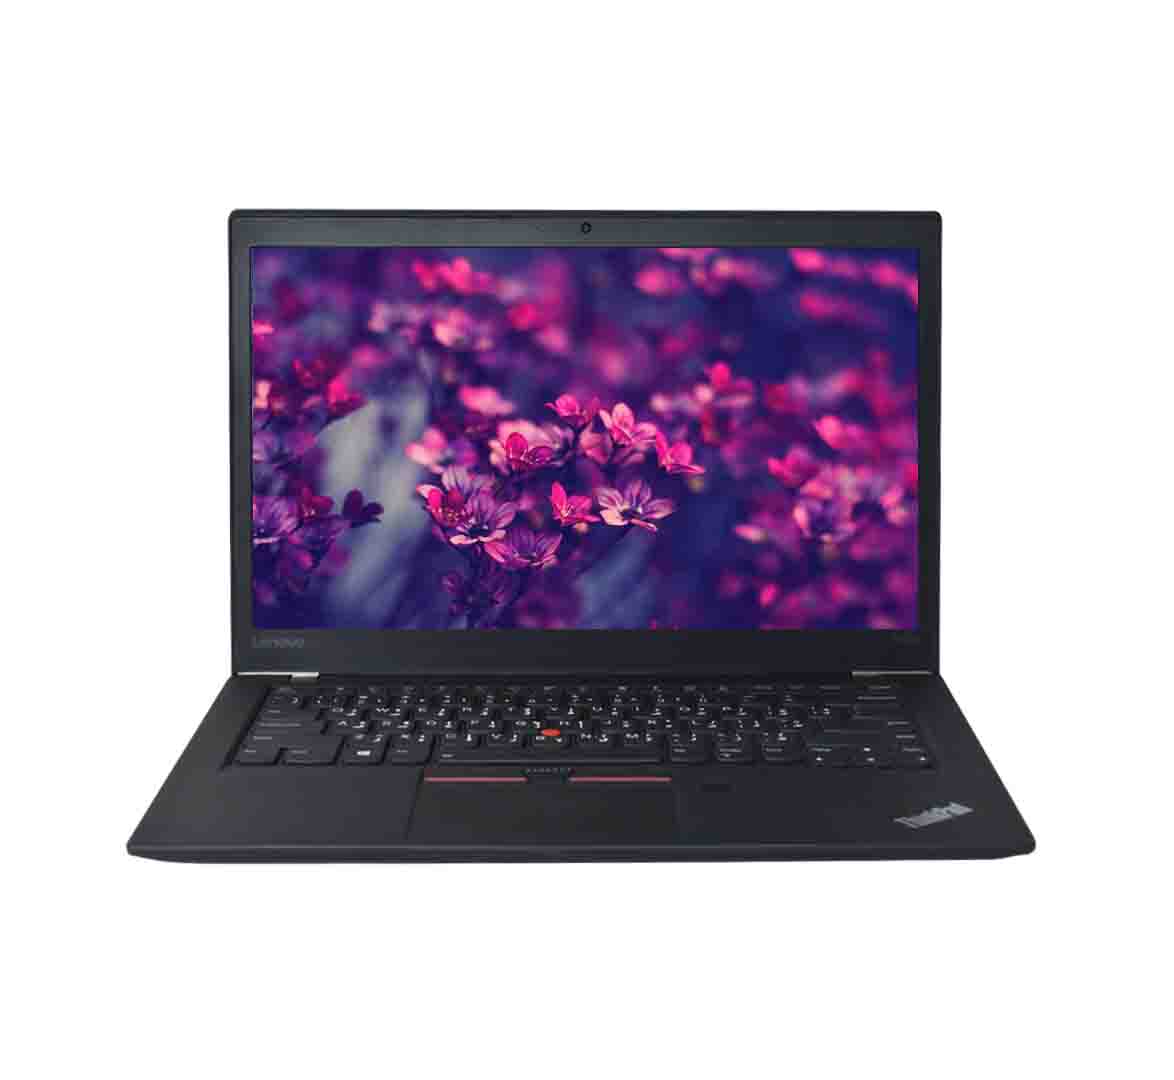 Lenovo ThinkPad T480s Business Laptop, Intel Core i7-8th Generation CPU, 8GB RAM, 256GB SSD, 14 inch Display, Windows 10 Pro